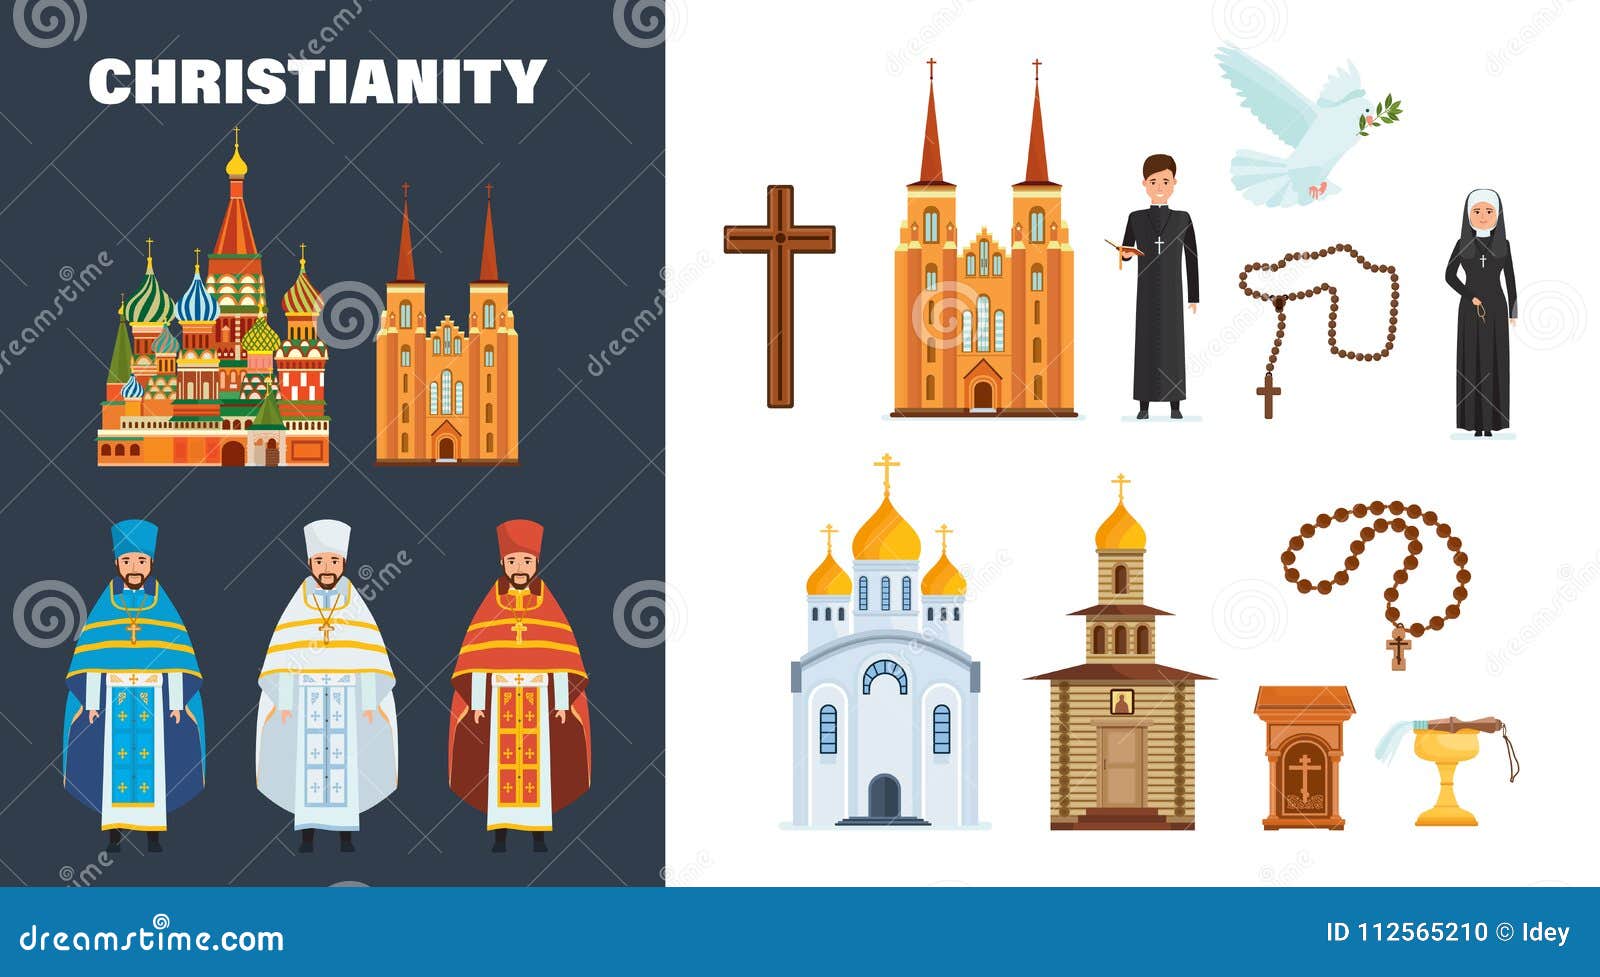 catholic and orthodox christianity. belief in god, christianity, orthodoxy.